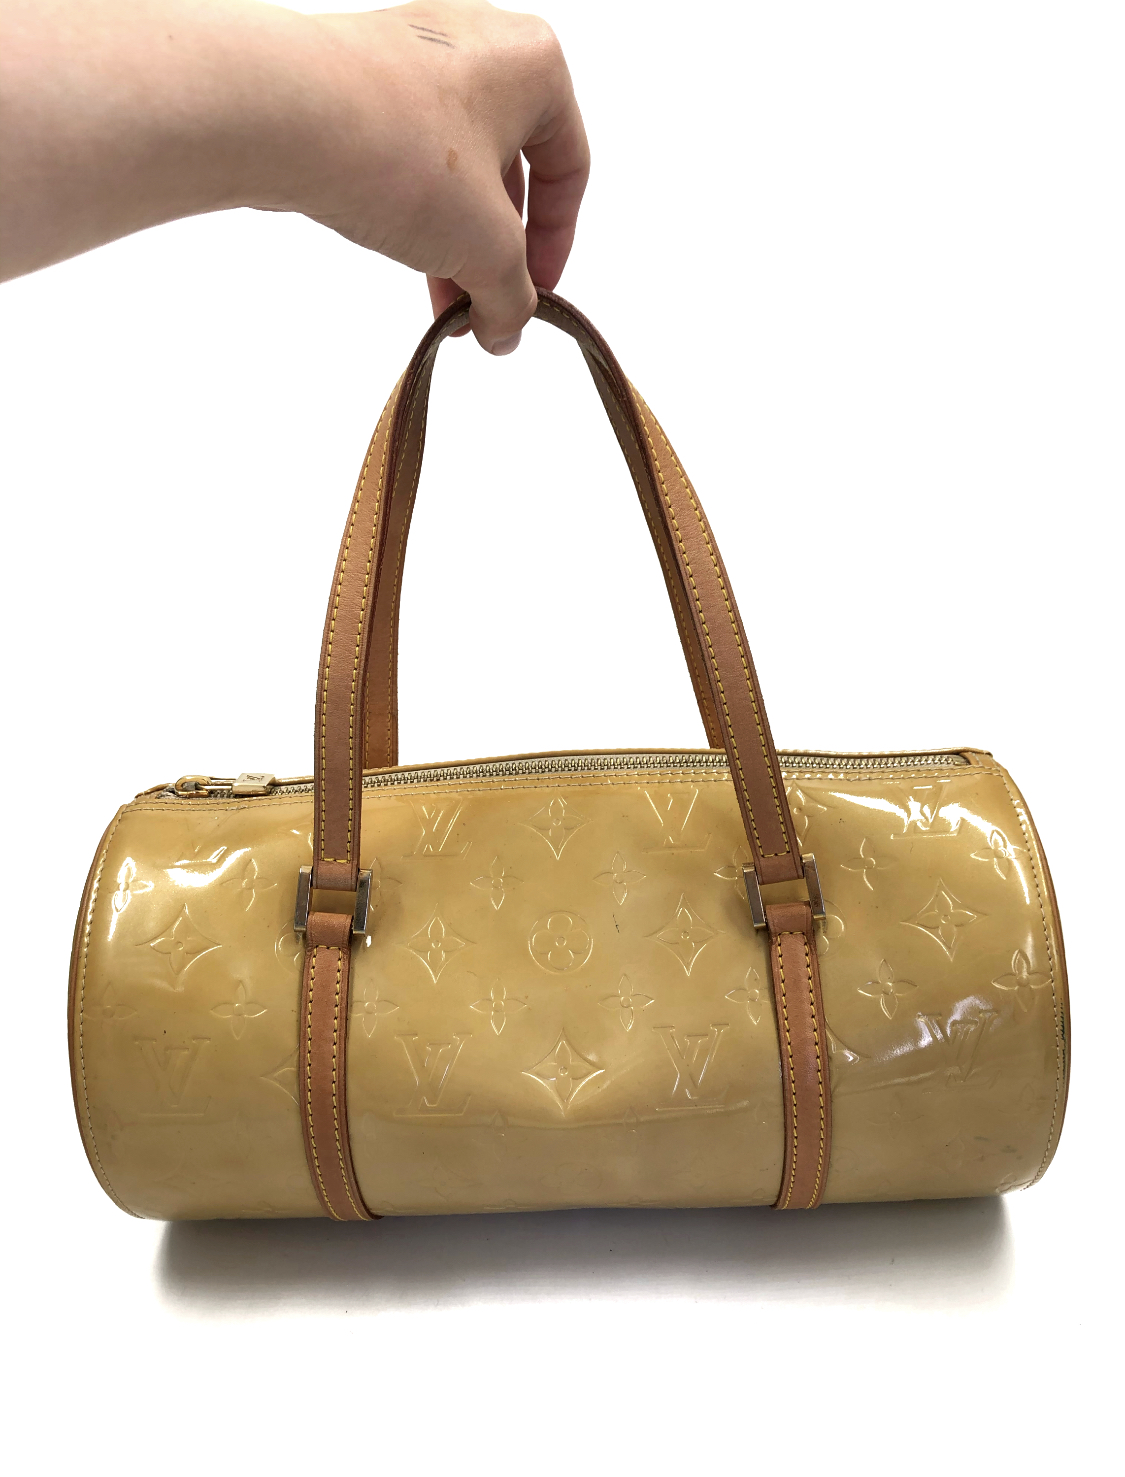 Round Louis Vuitton Bag - Louis Vuitton Yellow Round Bag : The rounded ...